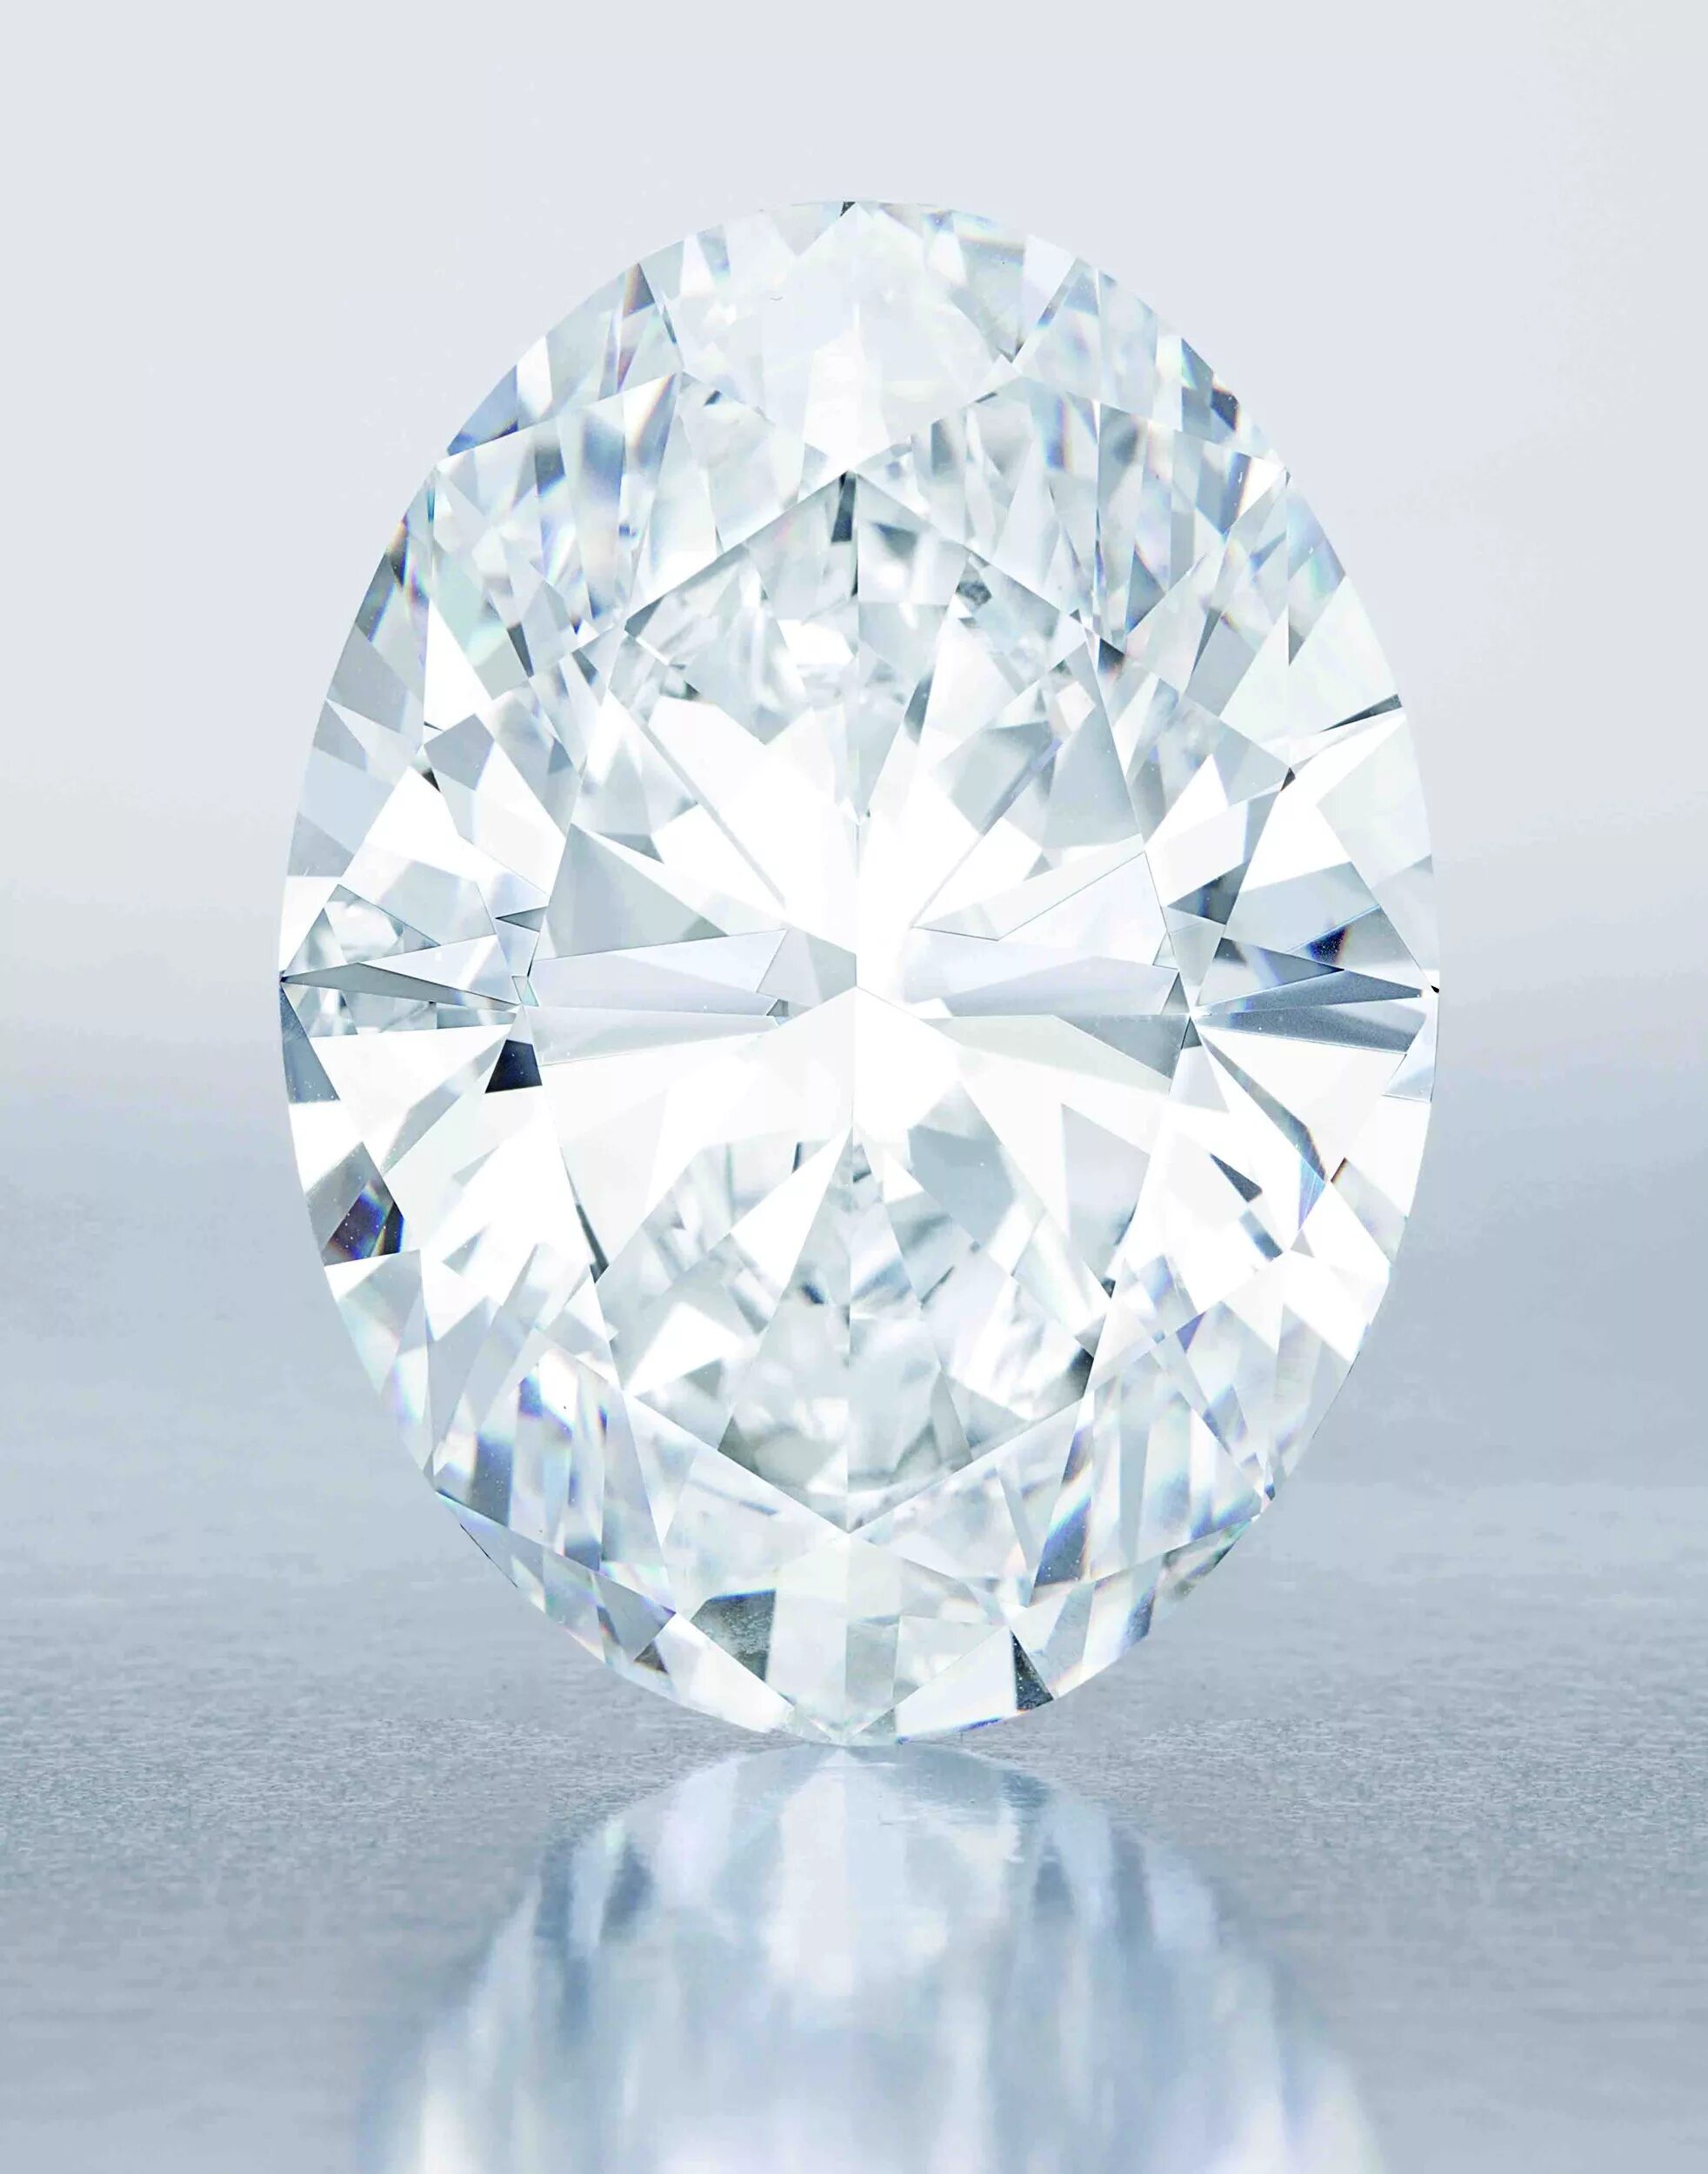 Diamond crystal. Сотбис бриллианты. Кристалл Даймонд Вайт. Белый Алмаз камень 1875 карат.